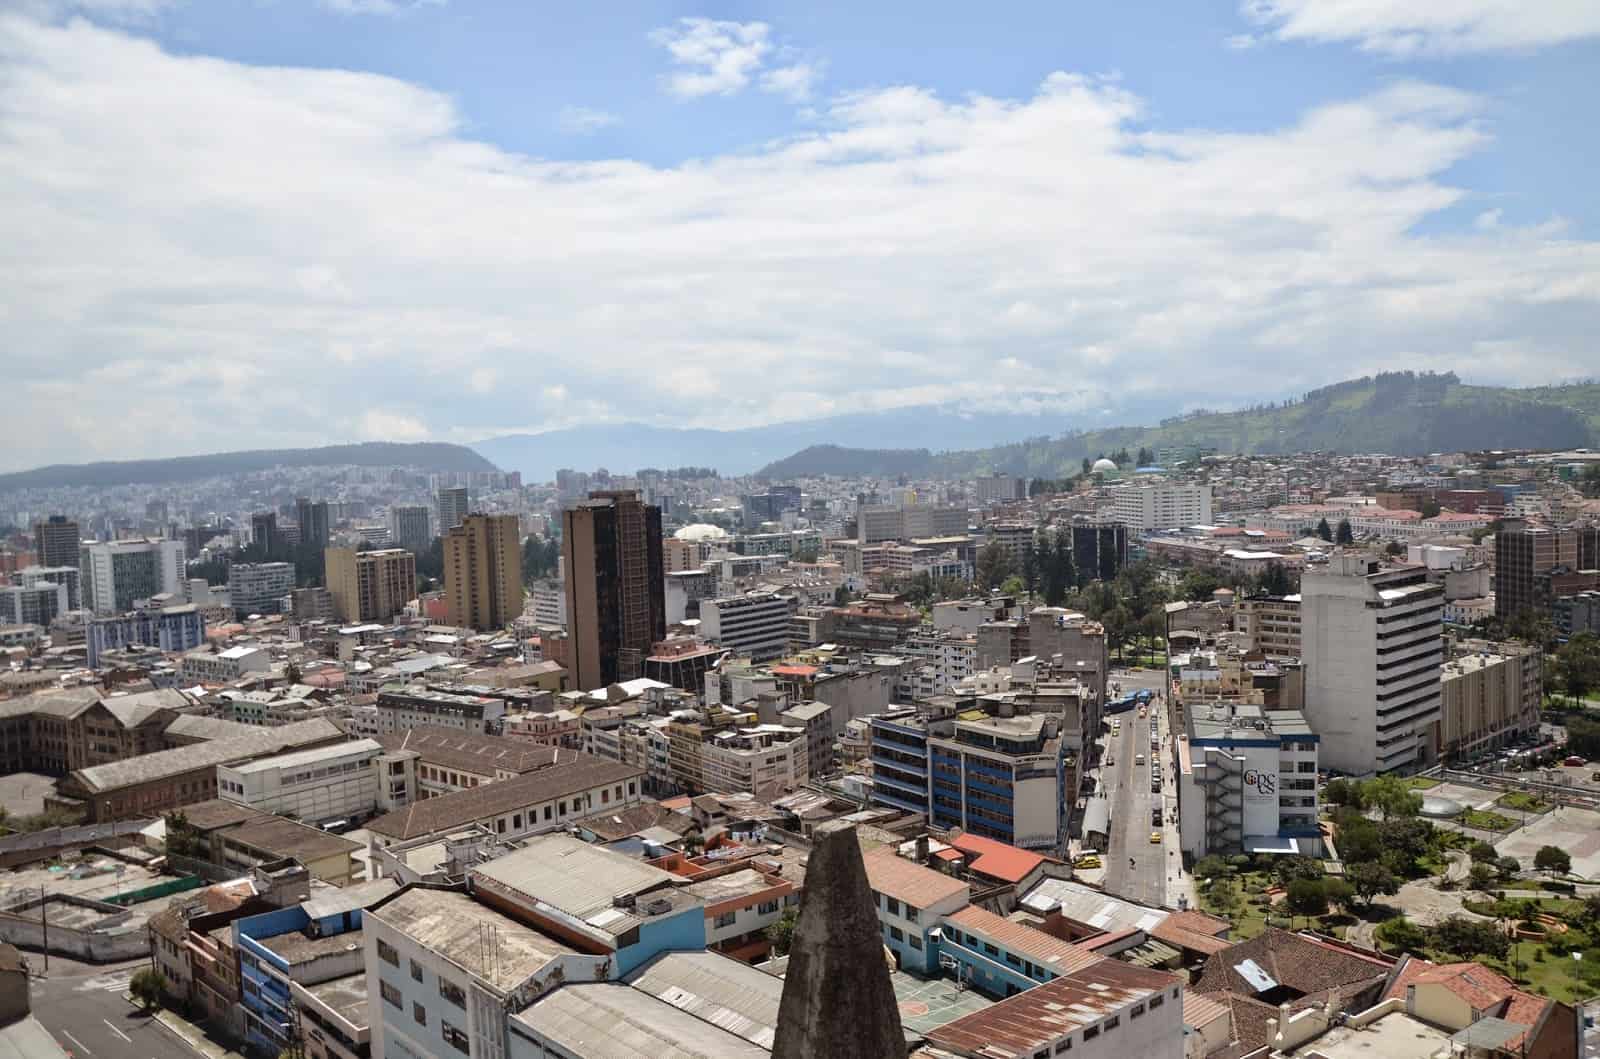 View from the tower of the Basílica del Voto Nacional in Quito, Ecuador